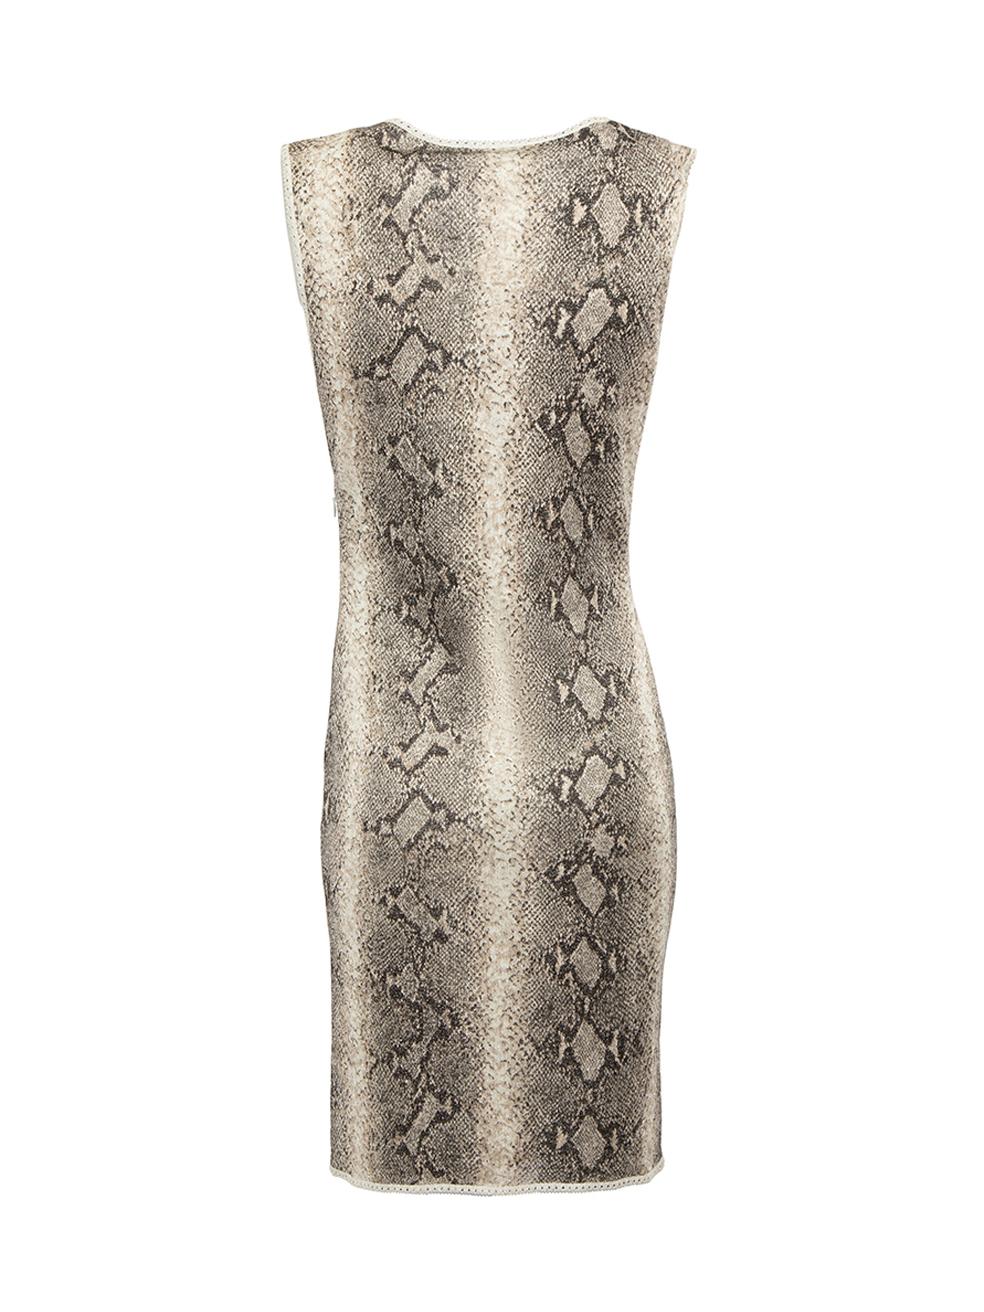 Brown Vintage Metallic Grey Snakeskin Print Knitted Dress Size M